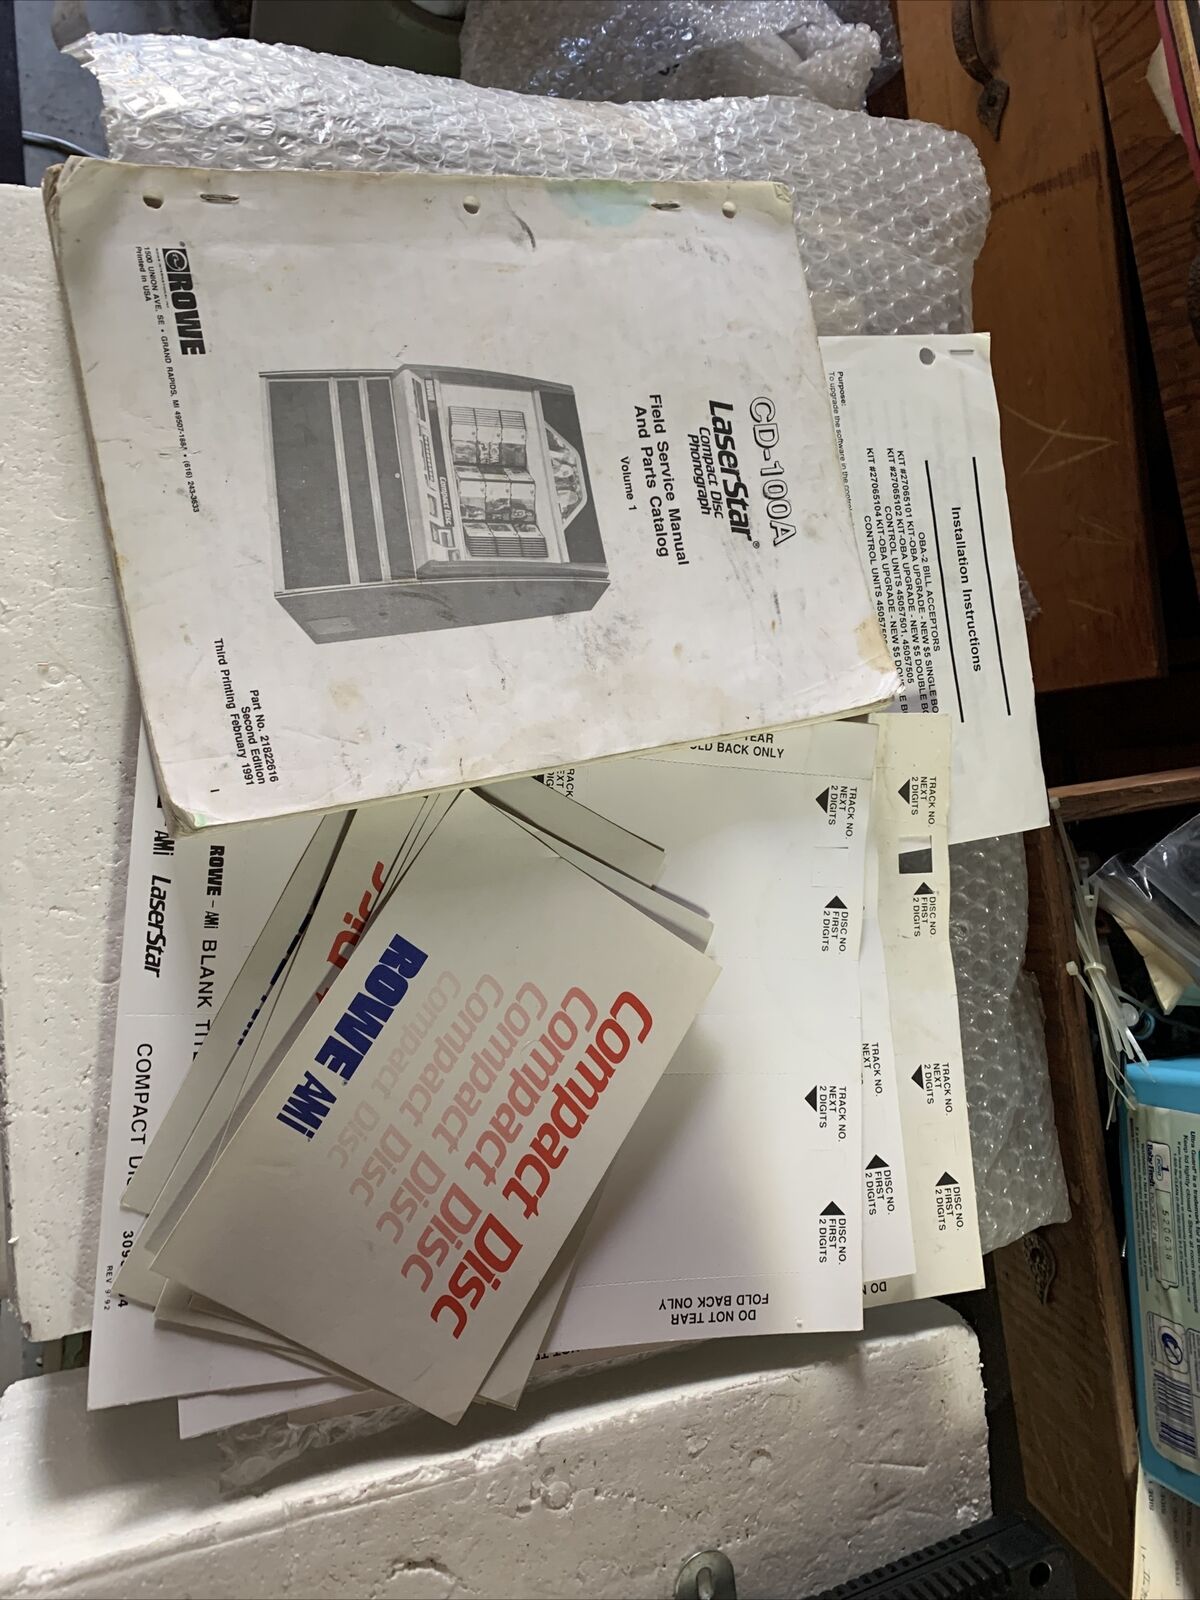 Original Rowe Laserstar Cd-100a Missing Cover + 8 Cards+11 Sheet Jukebox Manual